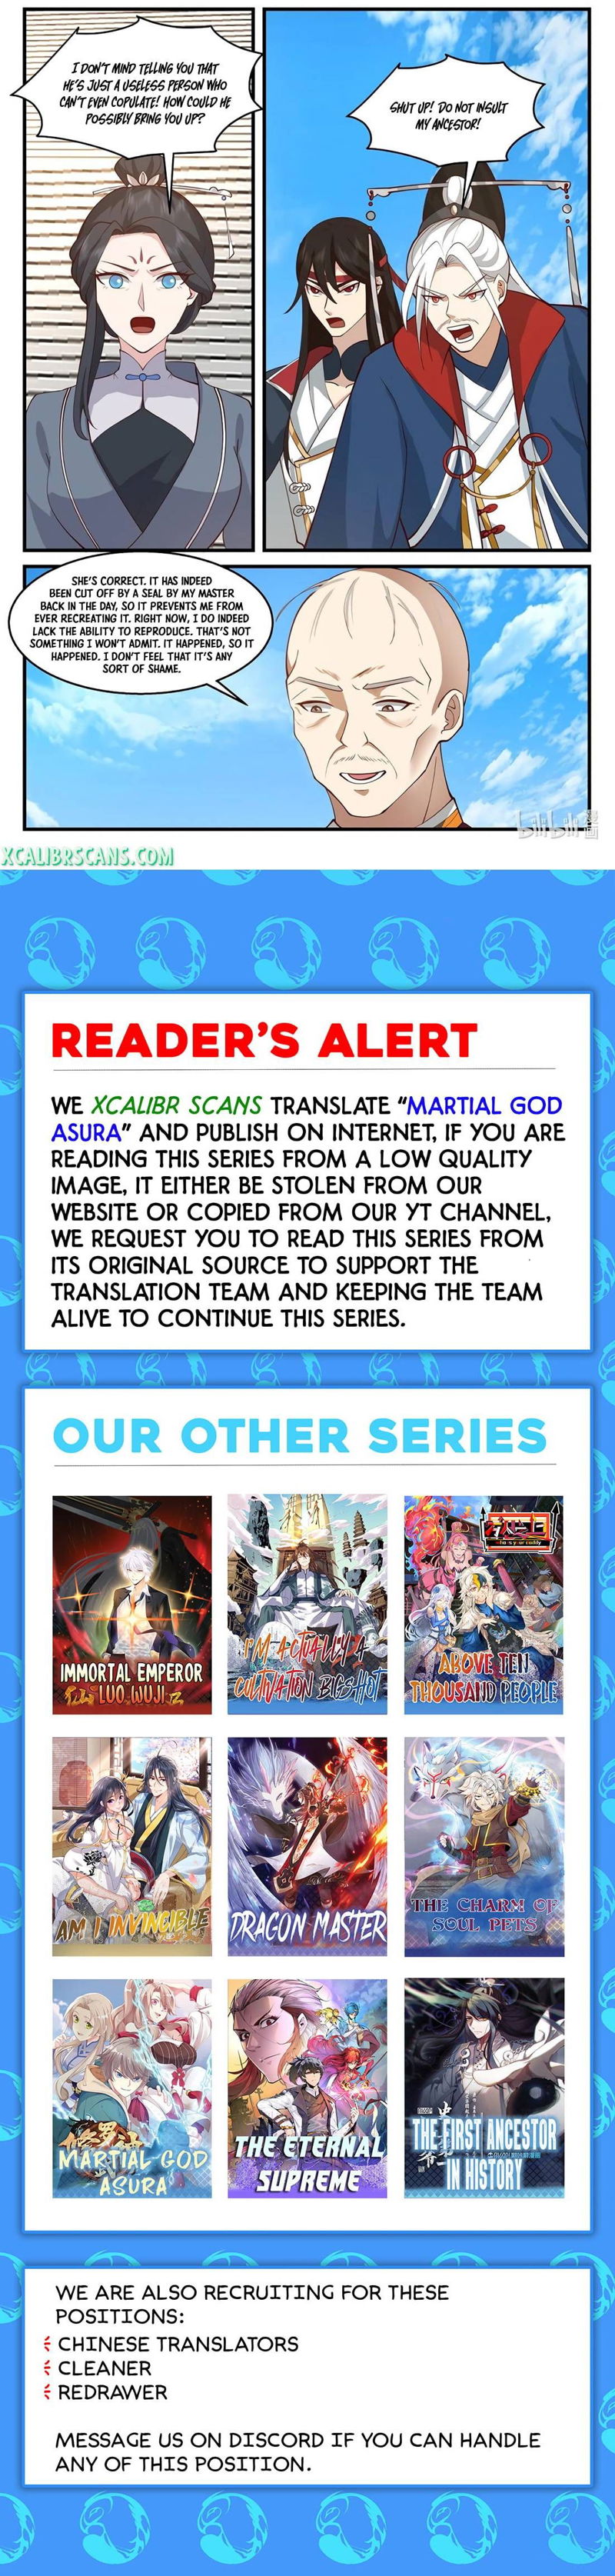 Martial God Asura Chapter 577 page 10